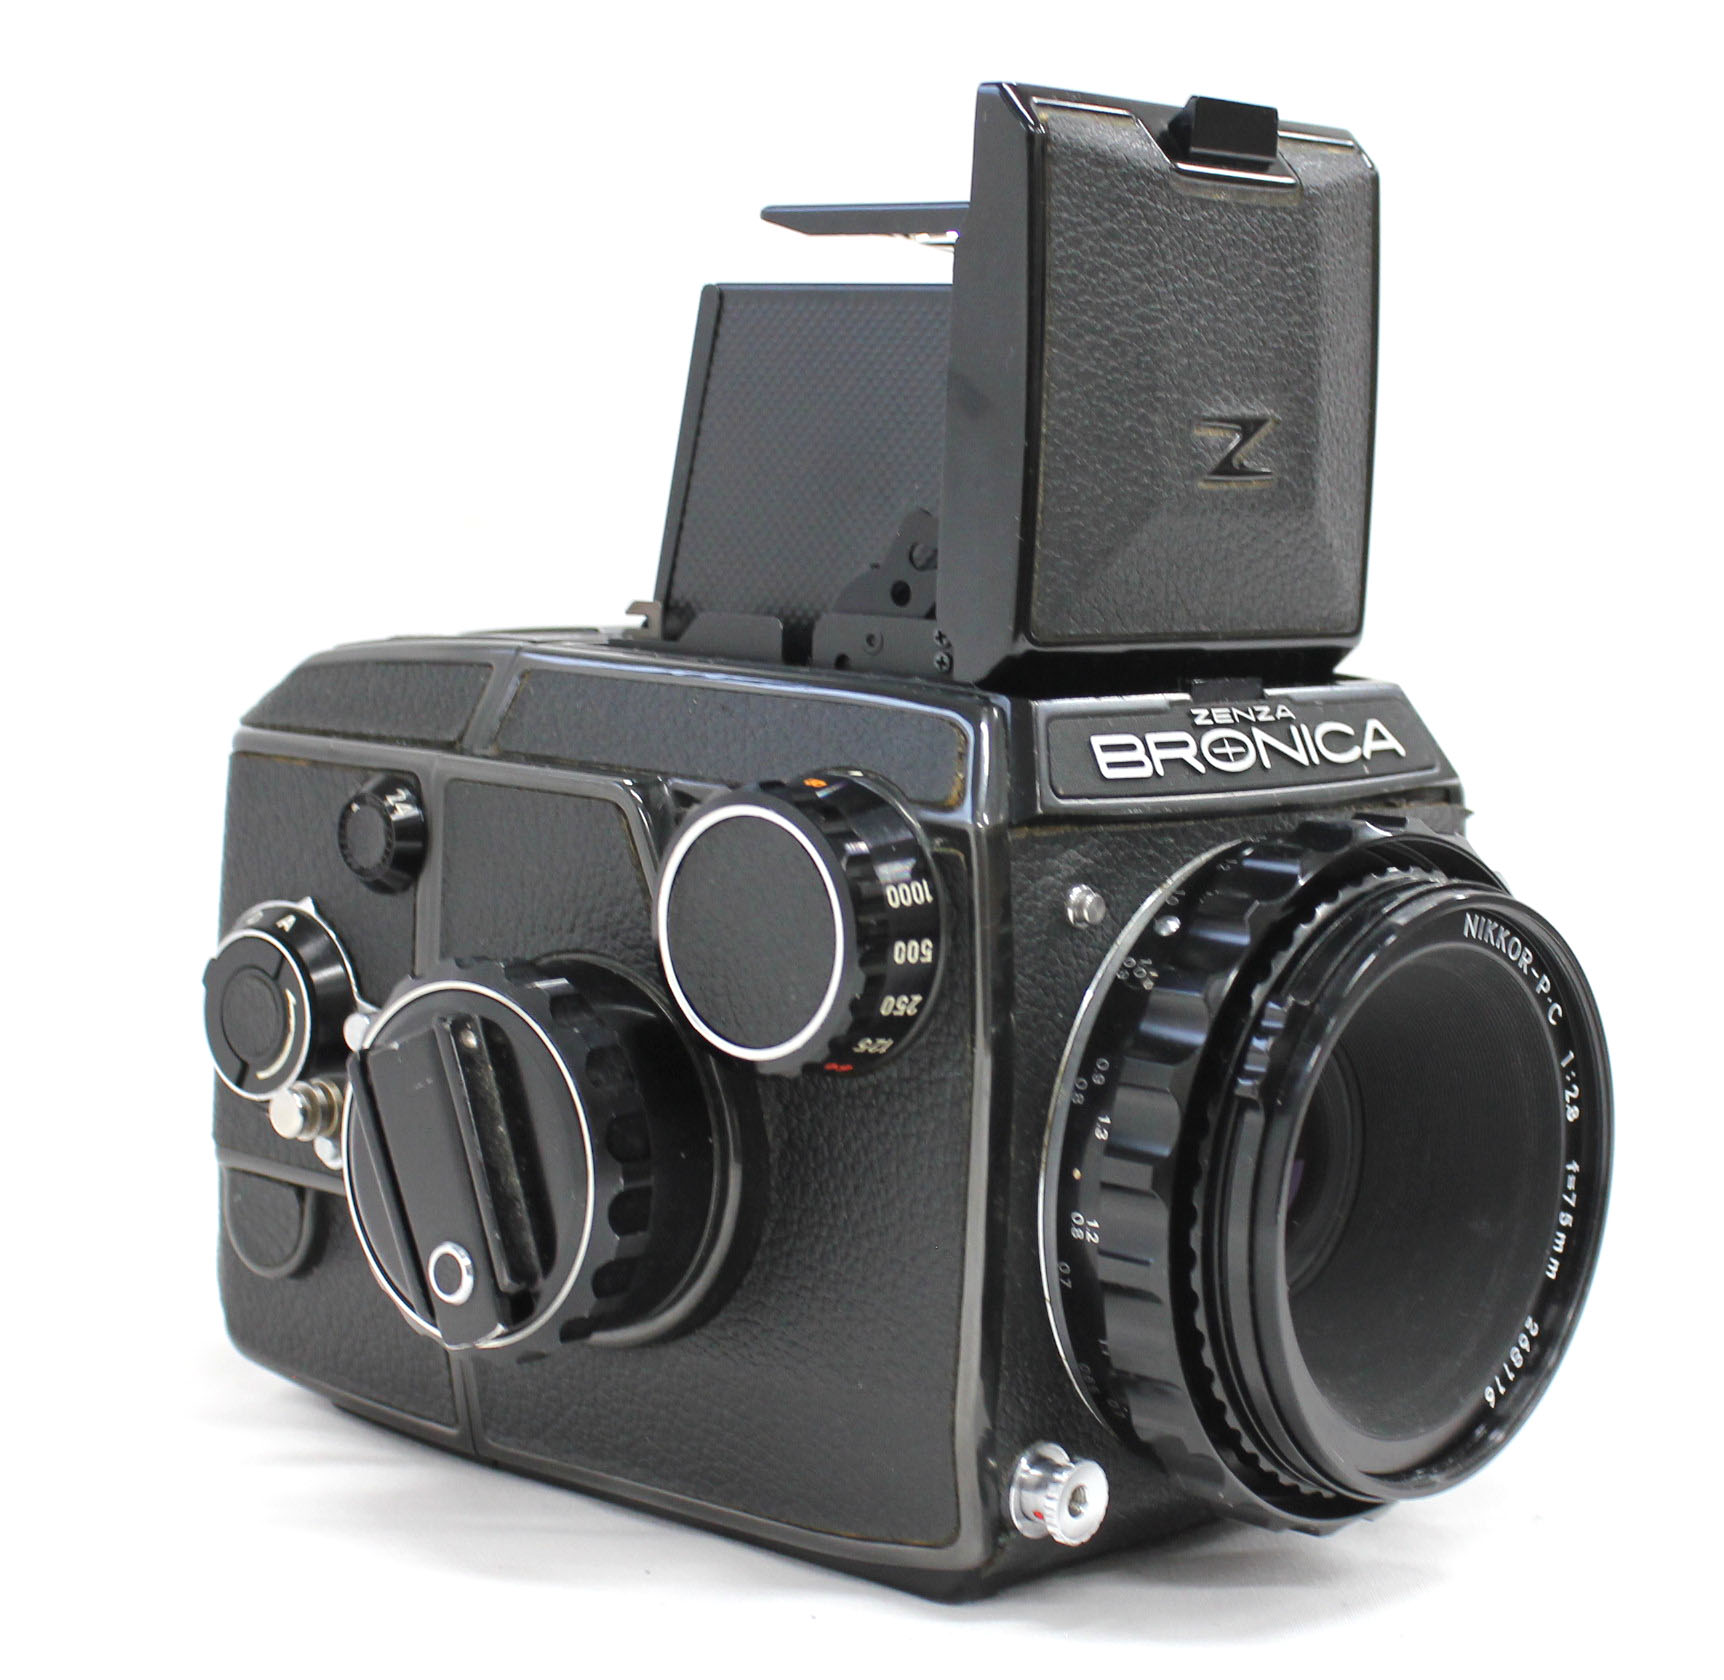  Zenza Bronica EC 6x6 Medium Format Camera w/ Nikkor-P.C 75mm F/2.8 Lens from Japan Photo 1